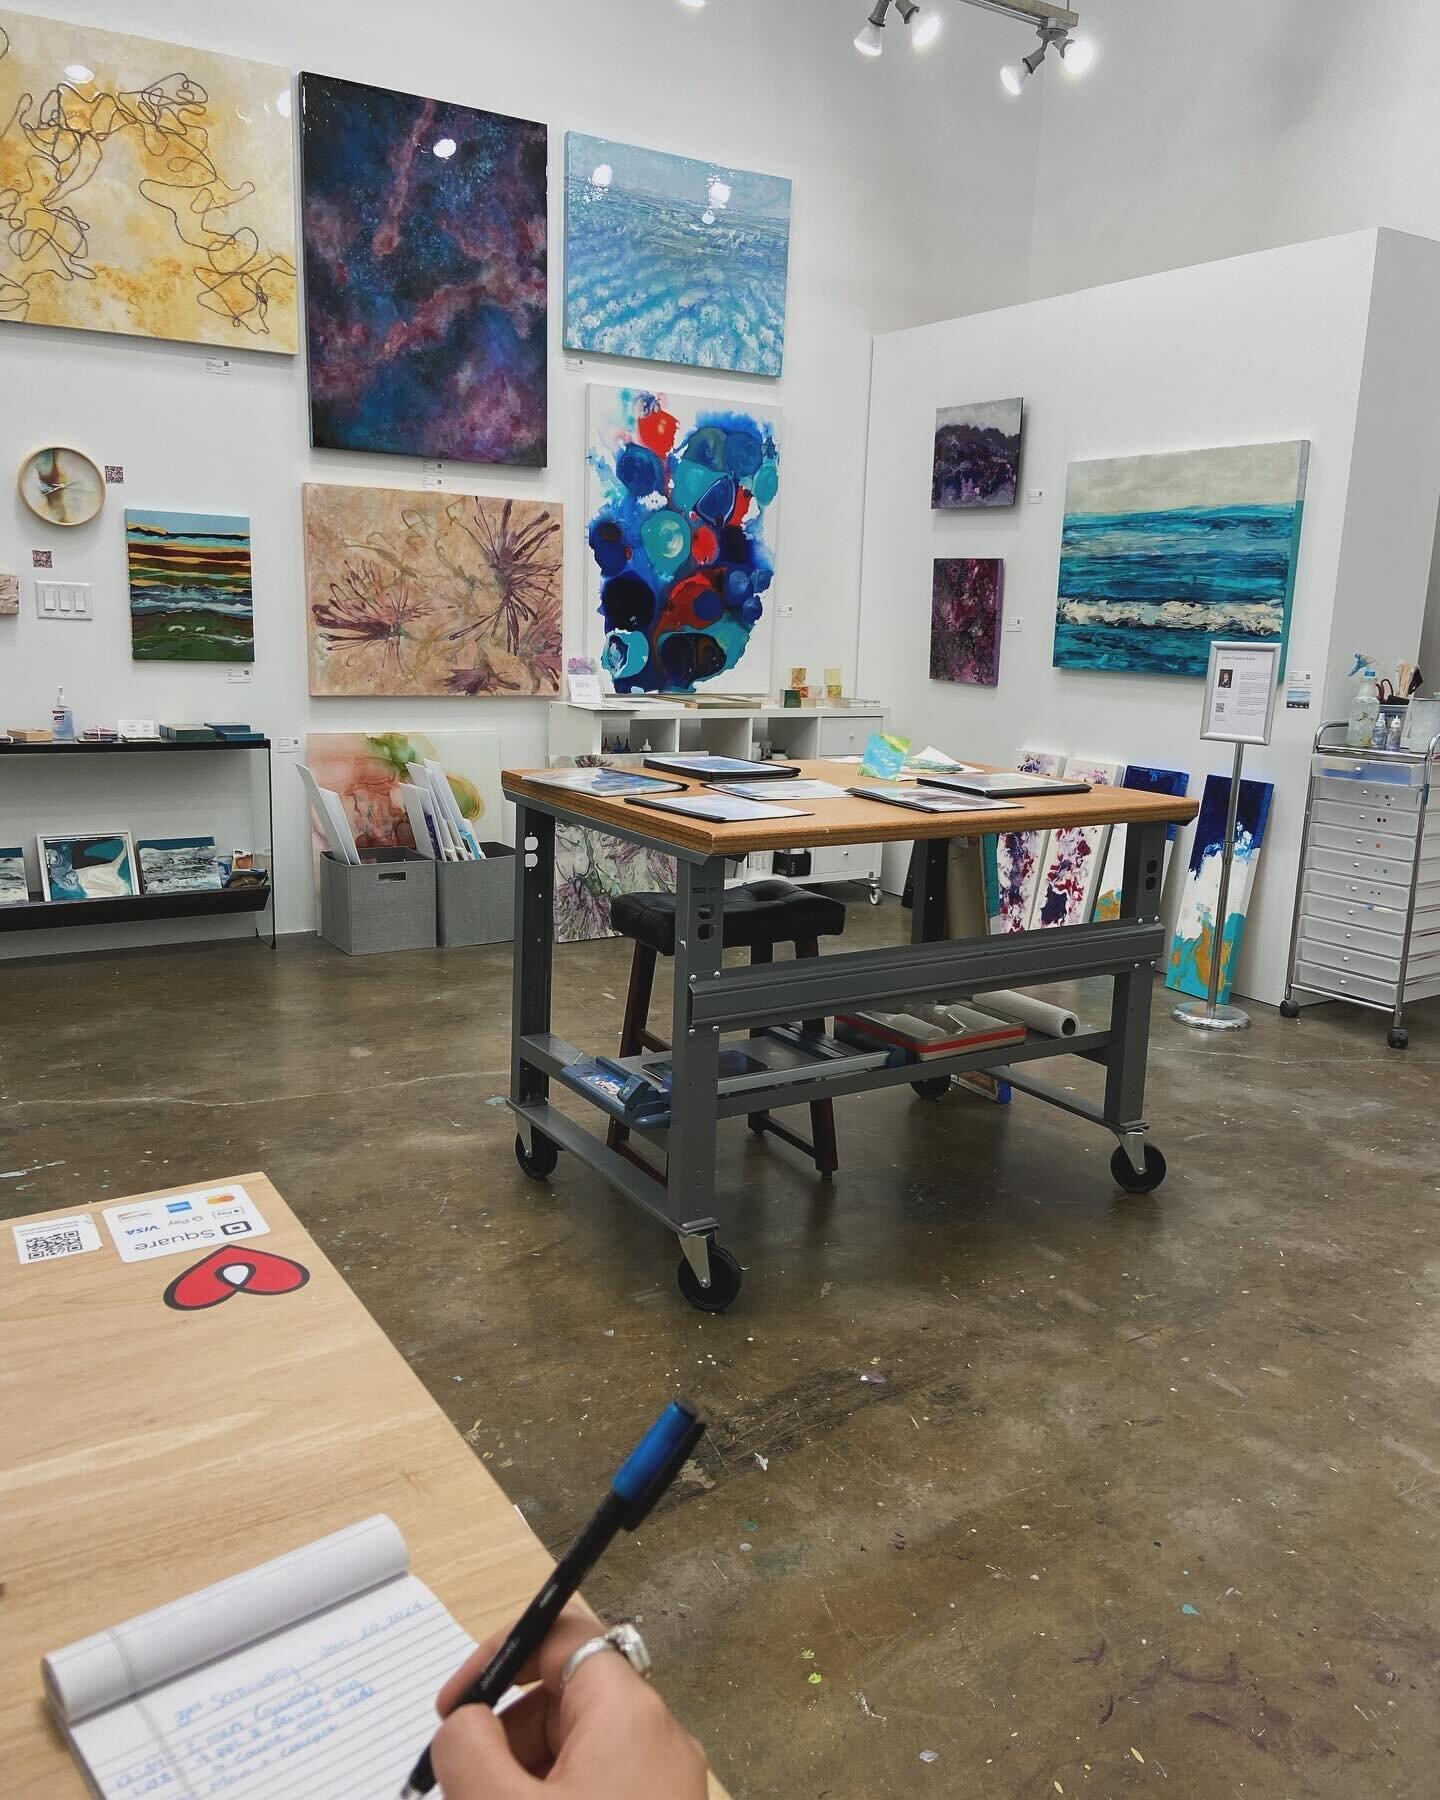 Third Saturday Open studios today at Silver street from 12-5pm! My studio is #117! 
#fluidart #artforsale #houstonart #houstonartscene #interiordesign #pouredacrylic #colorful